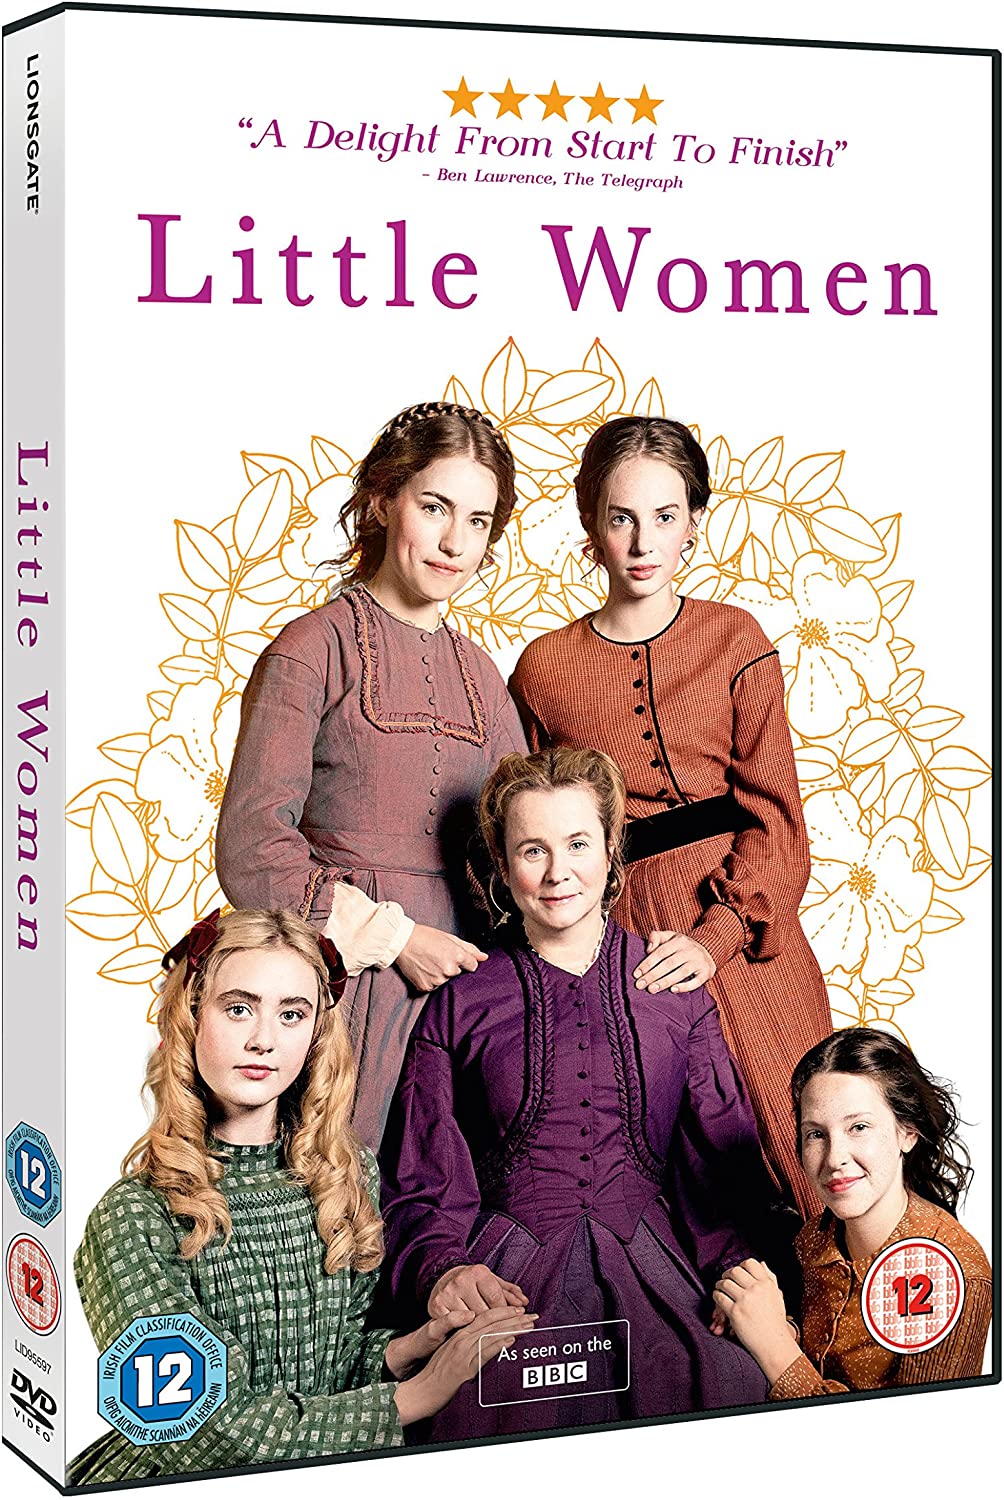 Little Women - Romance/Drama [DVD]